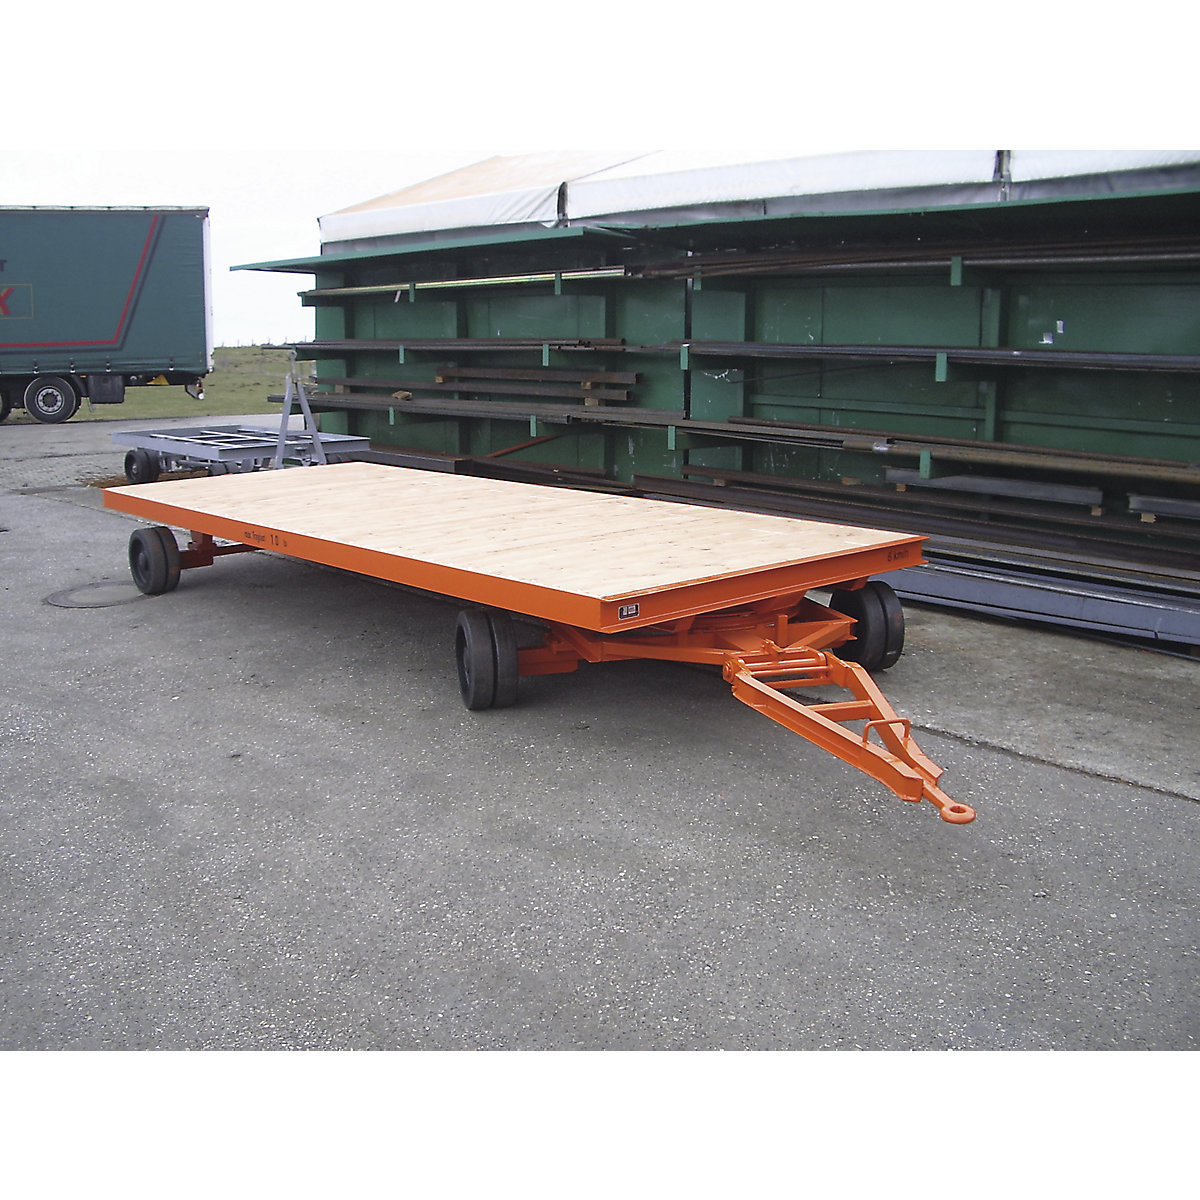 Heavy goods trailer, 10 t, turntable steering, platform 3.2 x 1.6 m